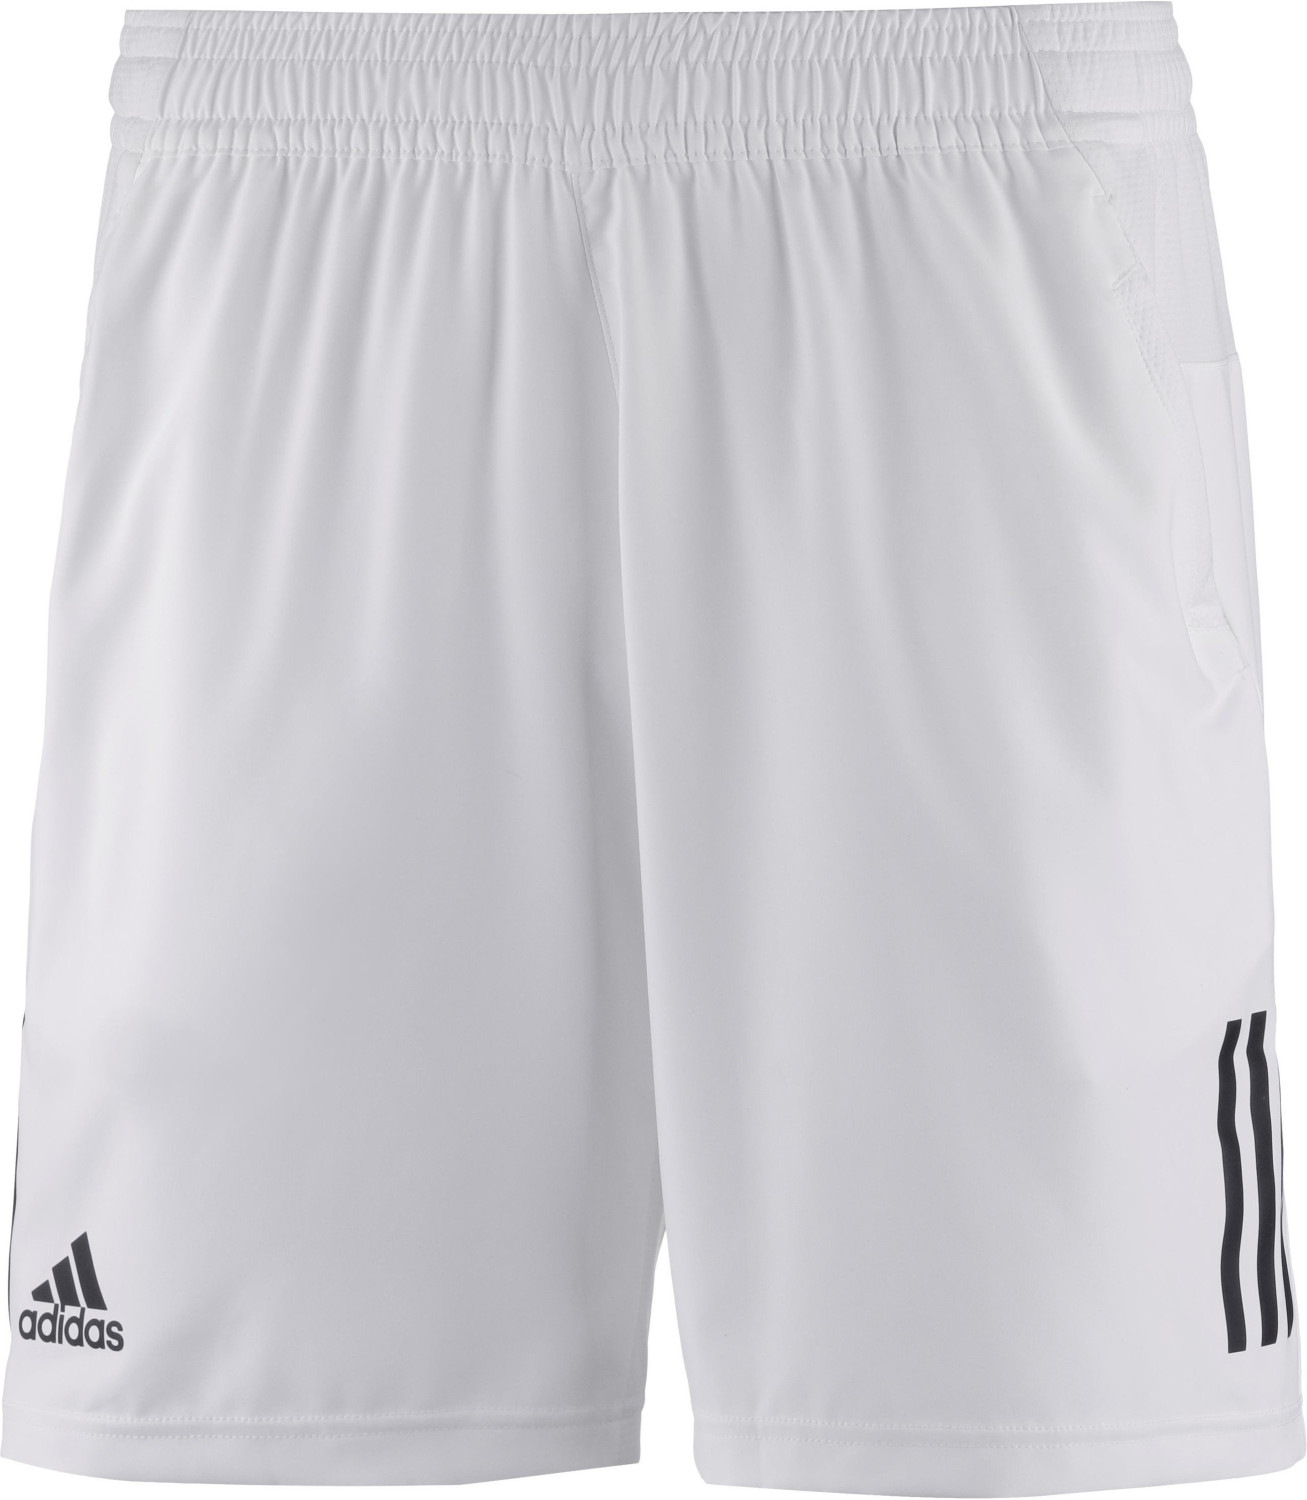 Adidas 3 Stripes Club Shorts Men white